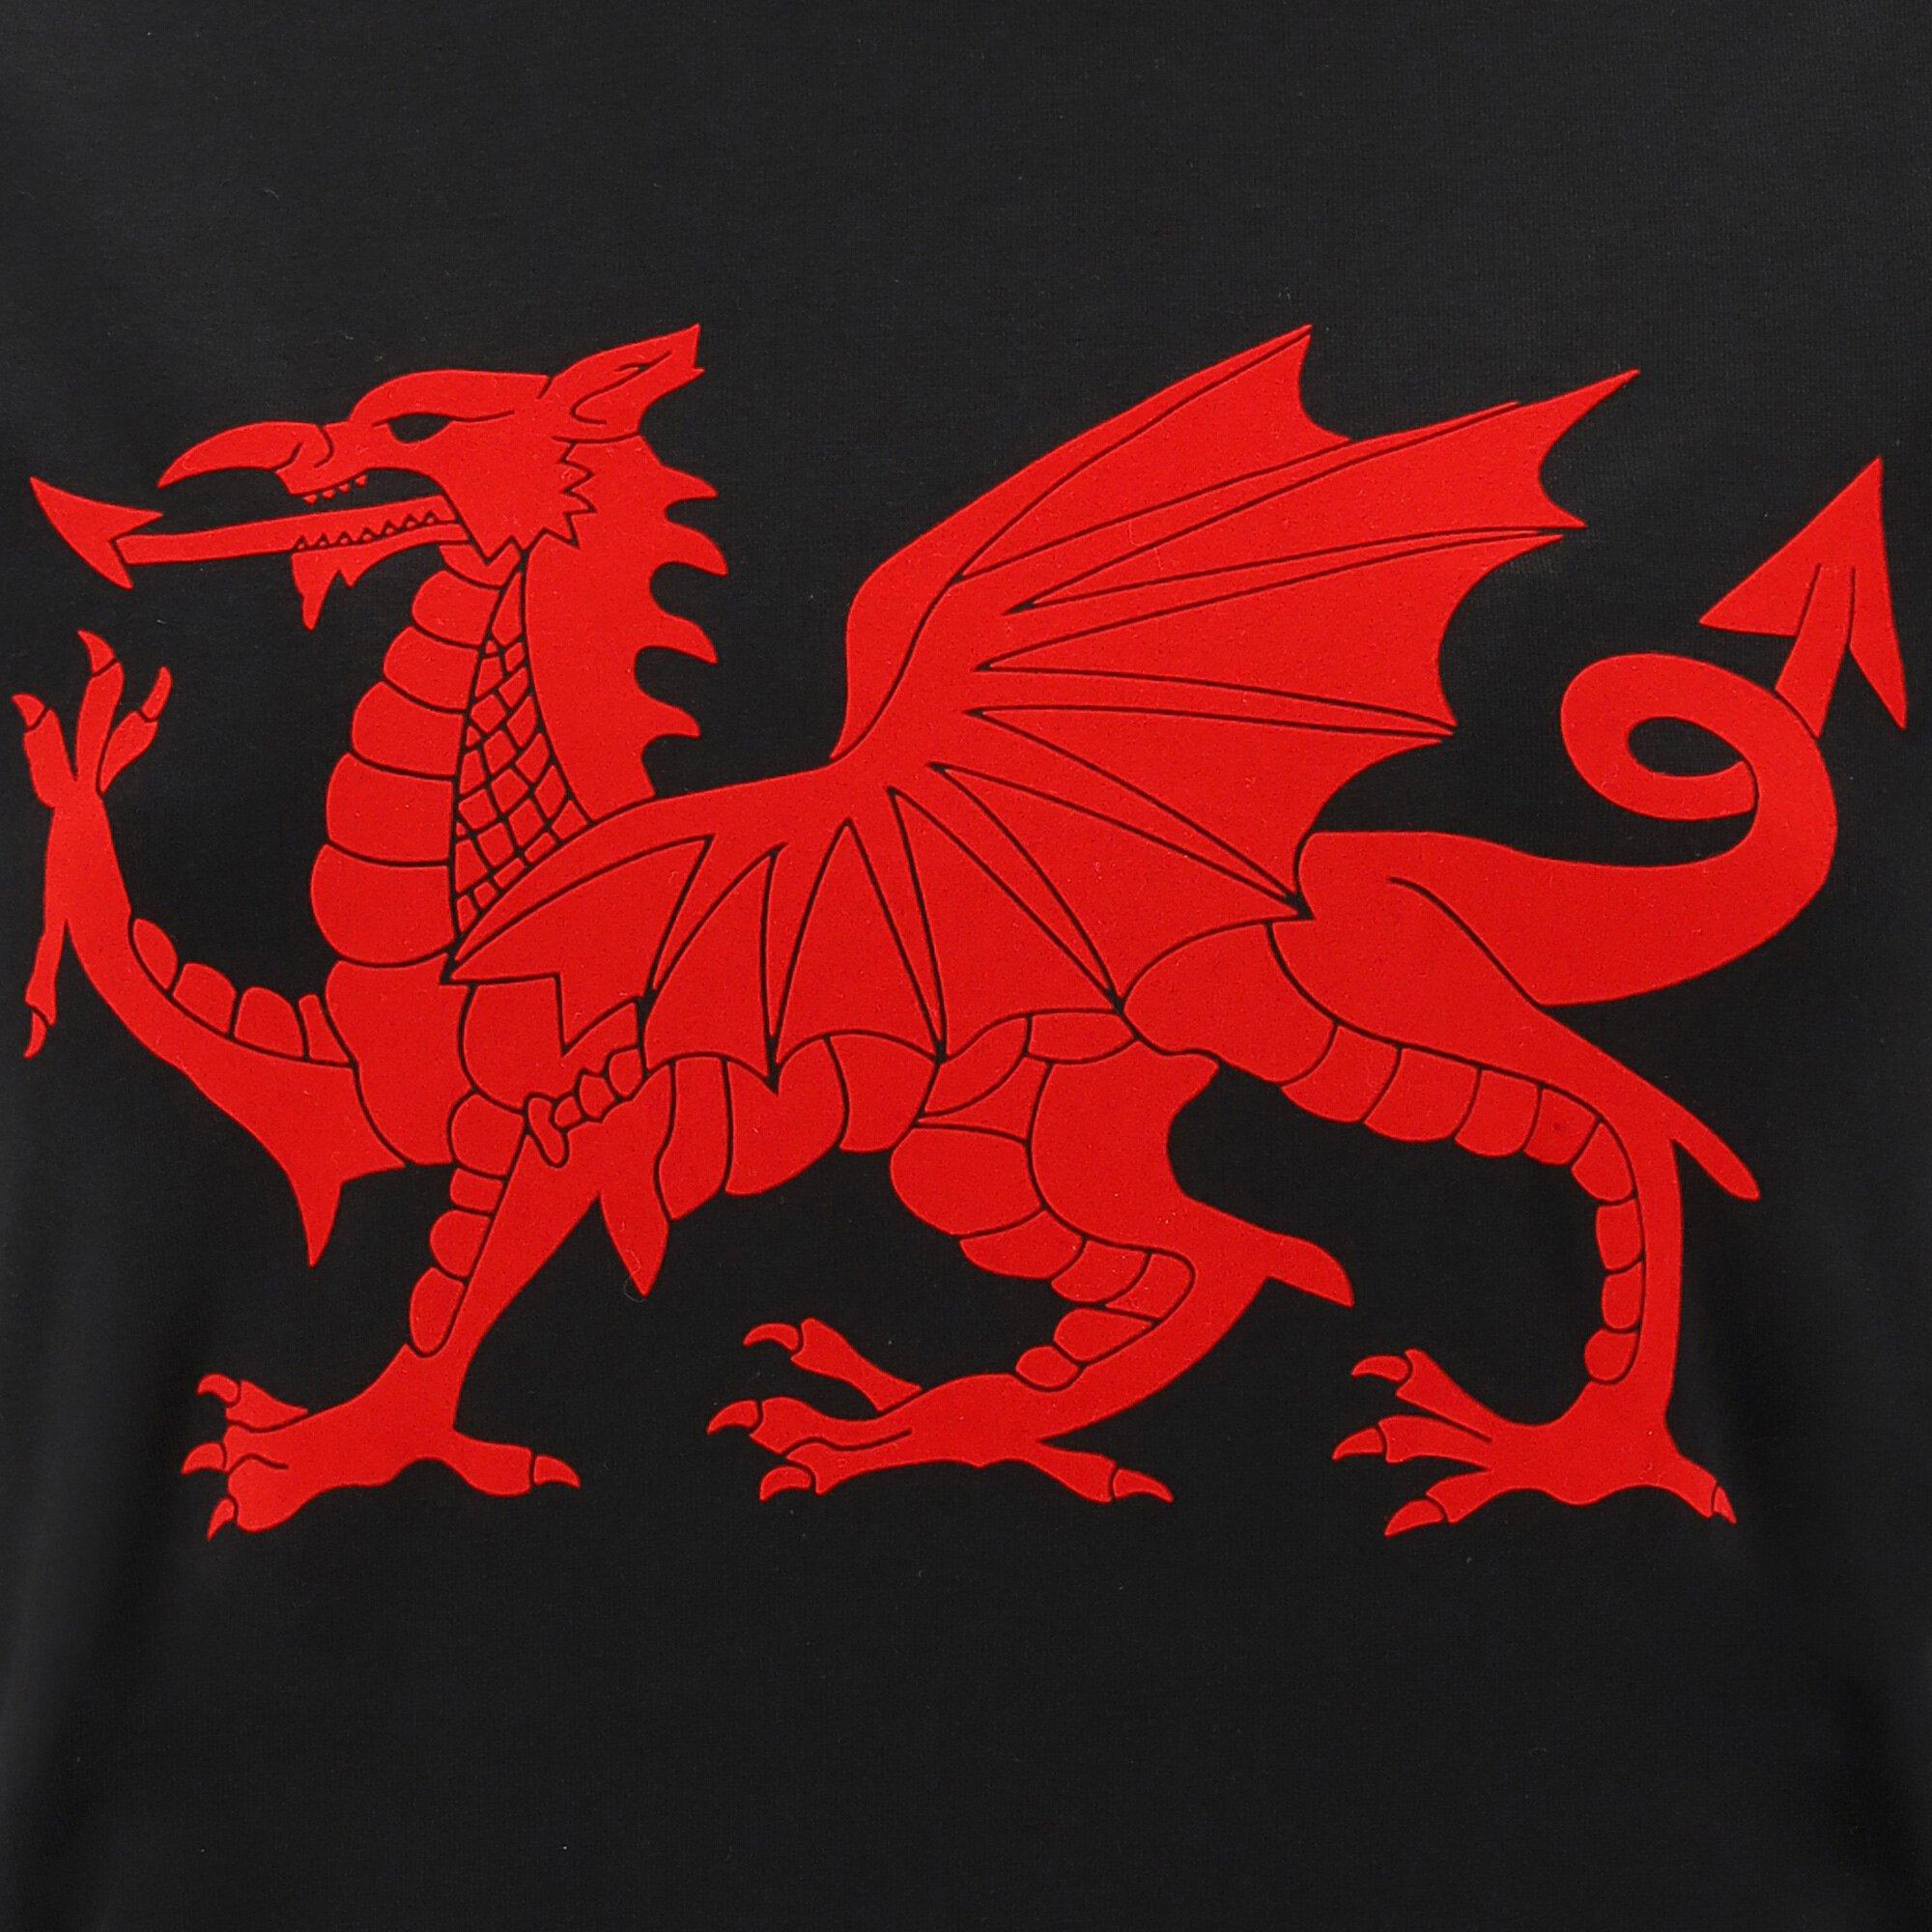 macron  -T-Shirt Pays de Galles Rugby XV 202021 